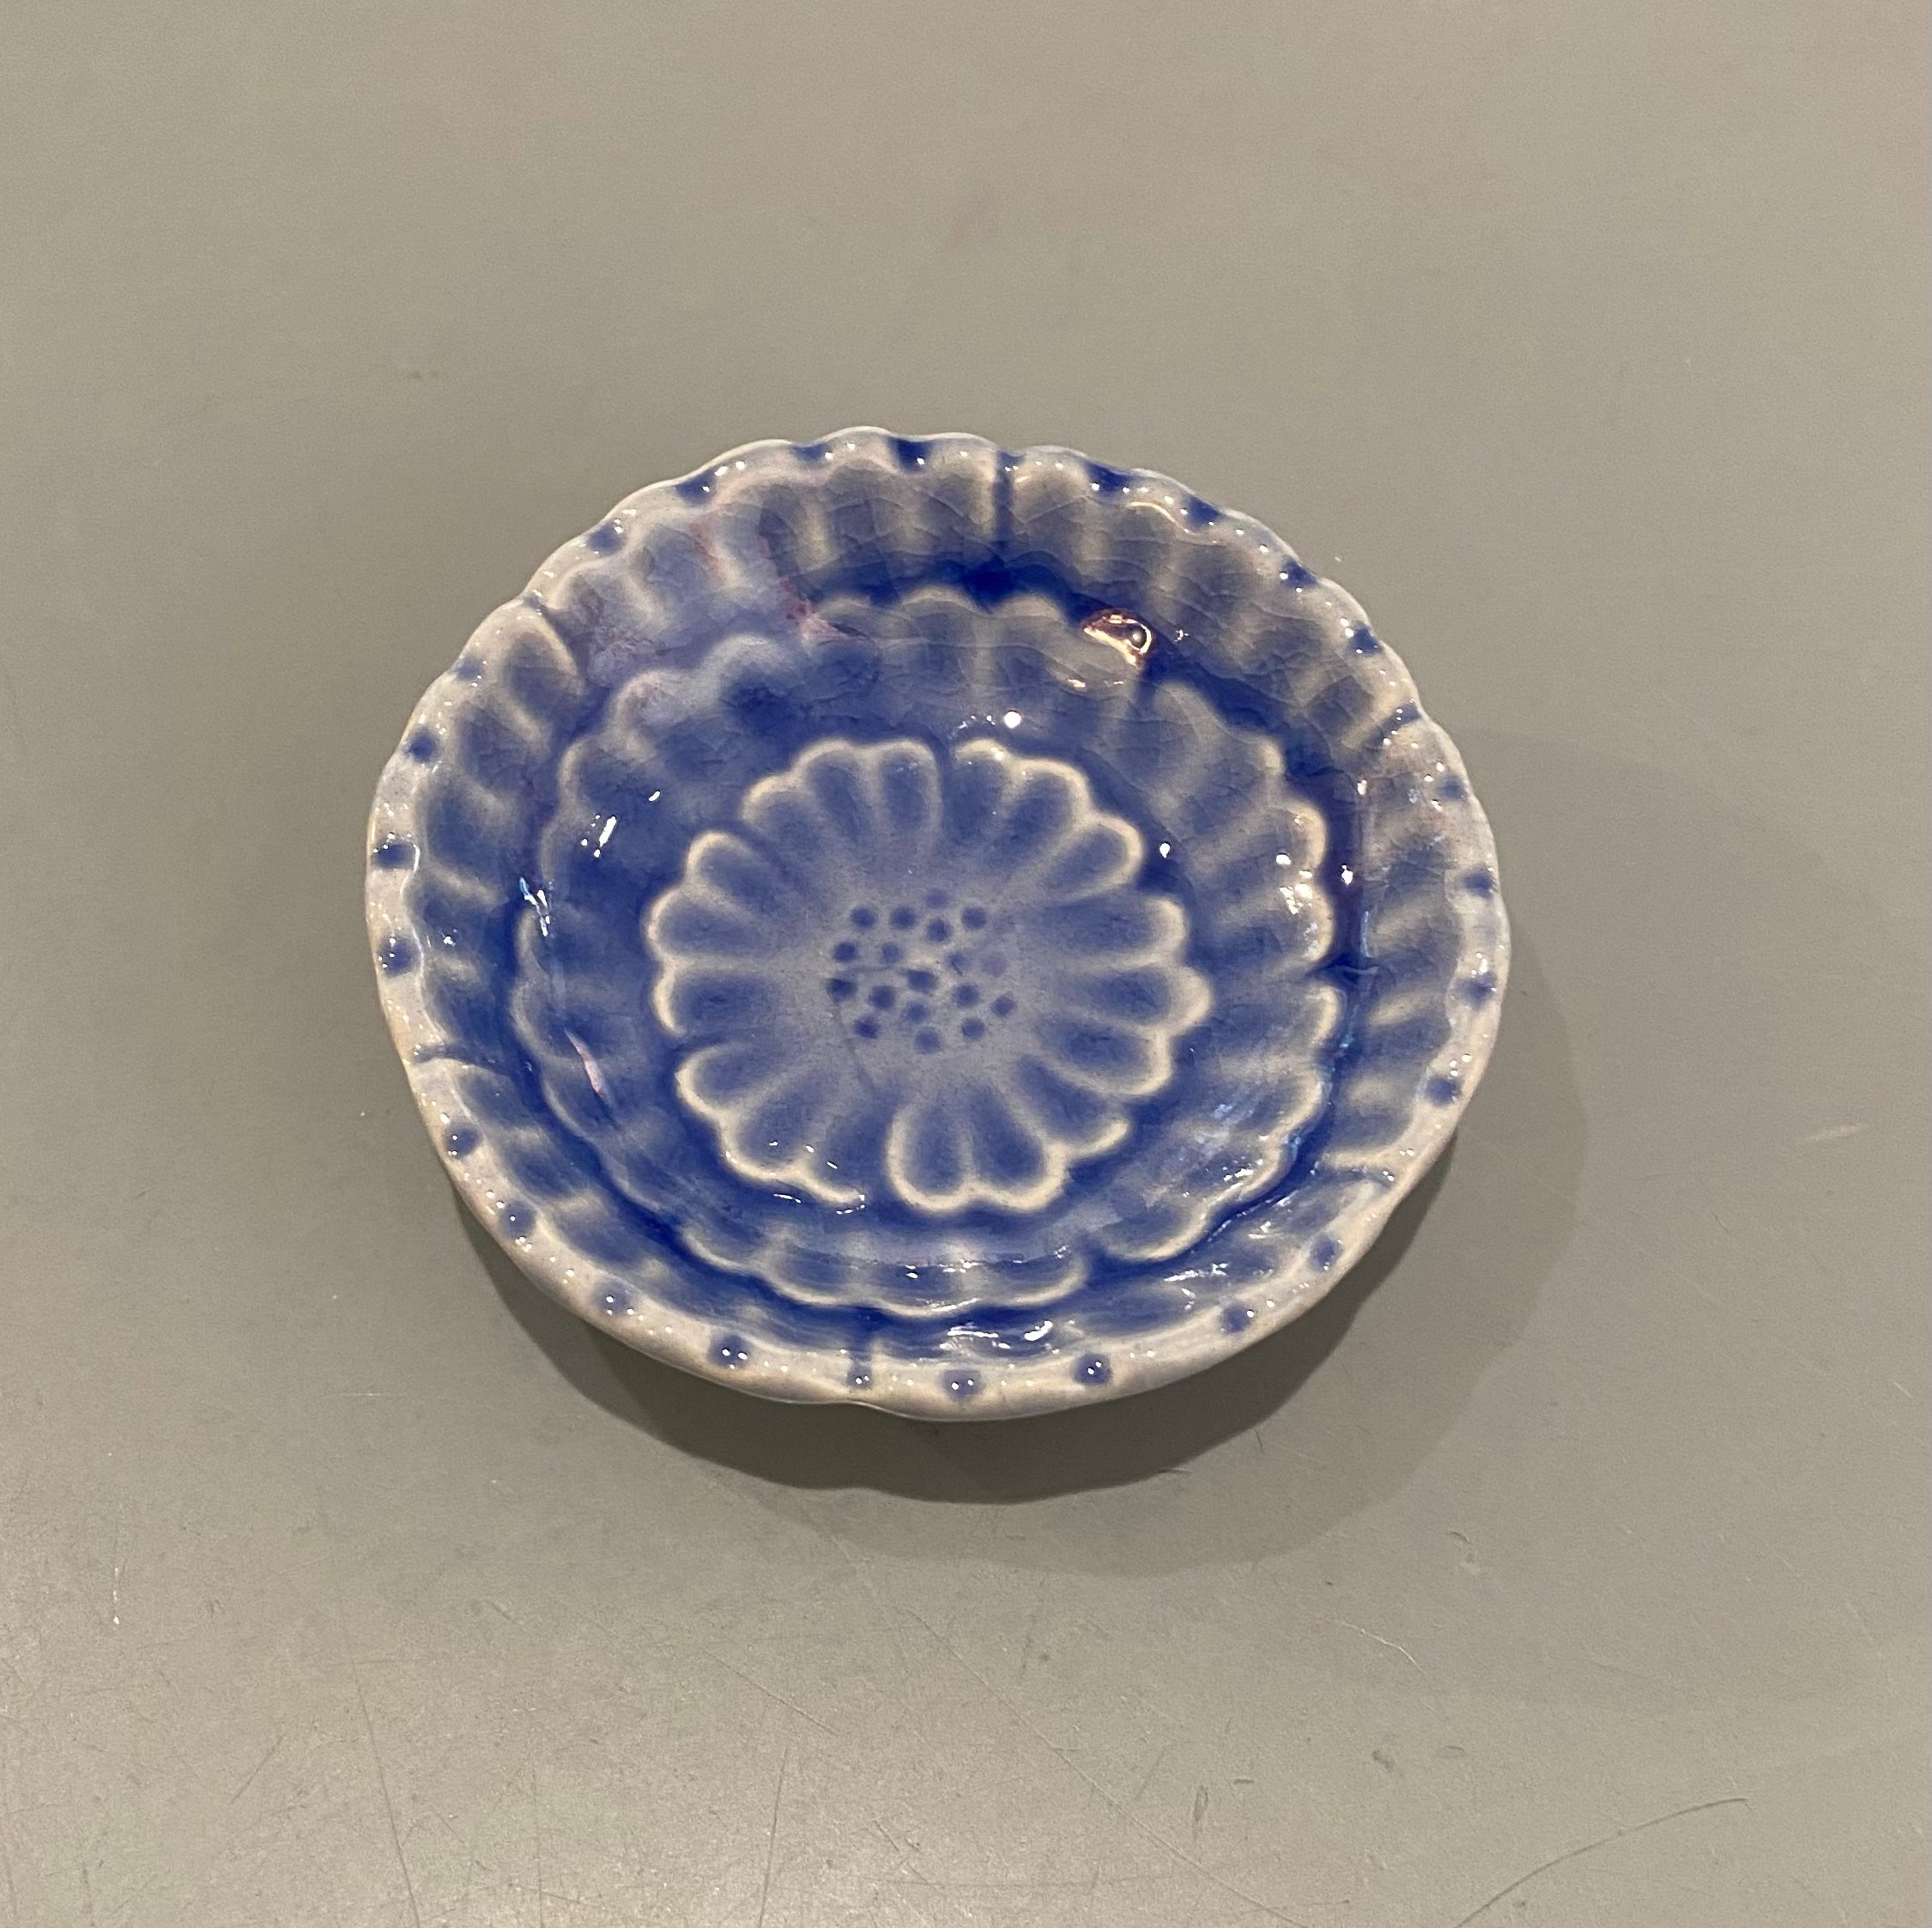 Mini flower bowls